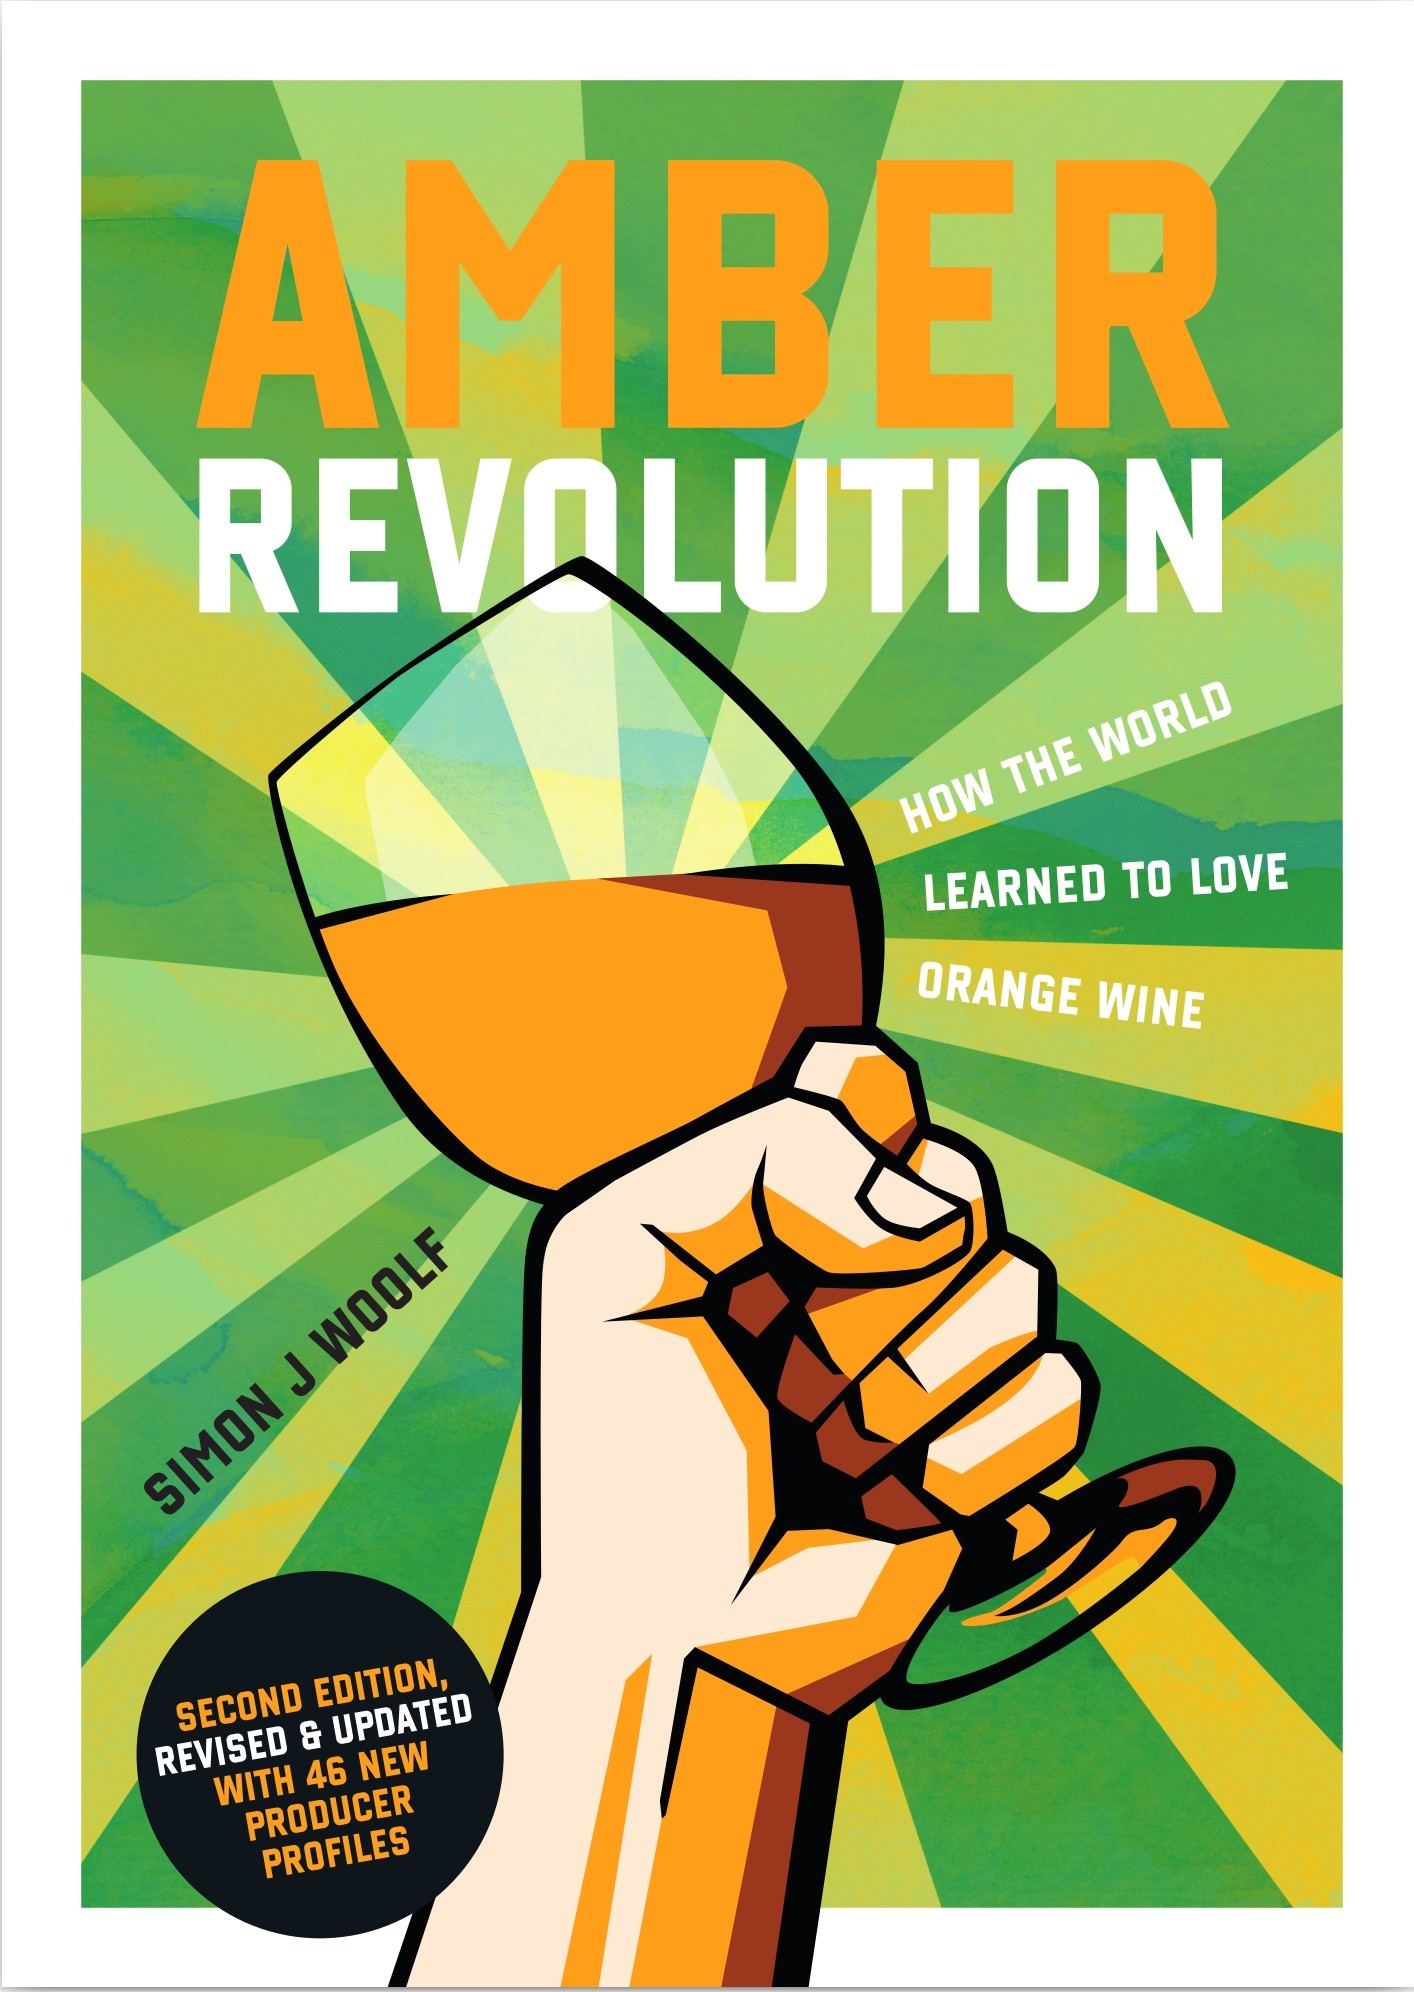 Buy Amber Revolution to read more orange wines.